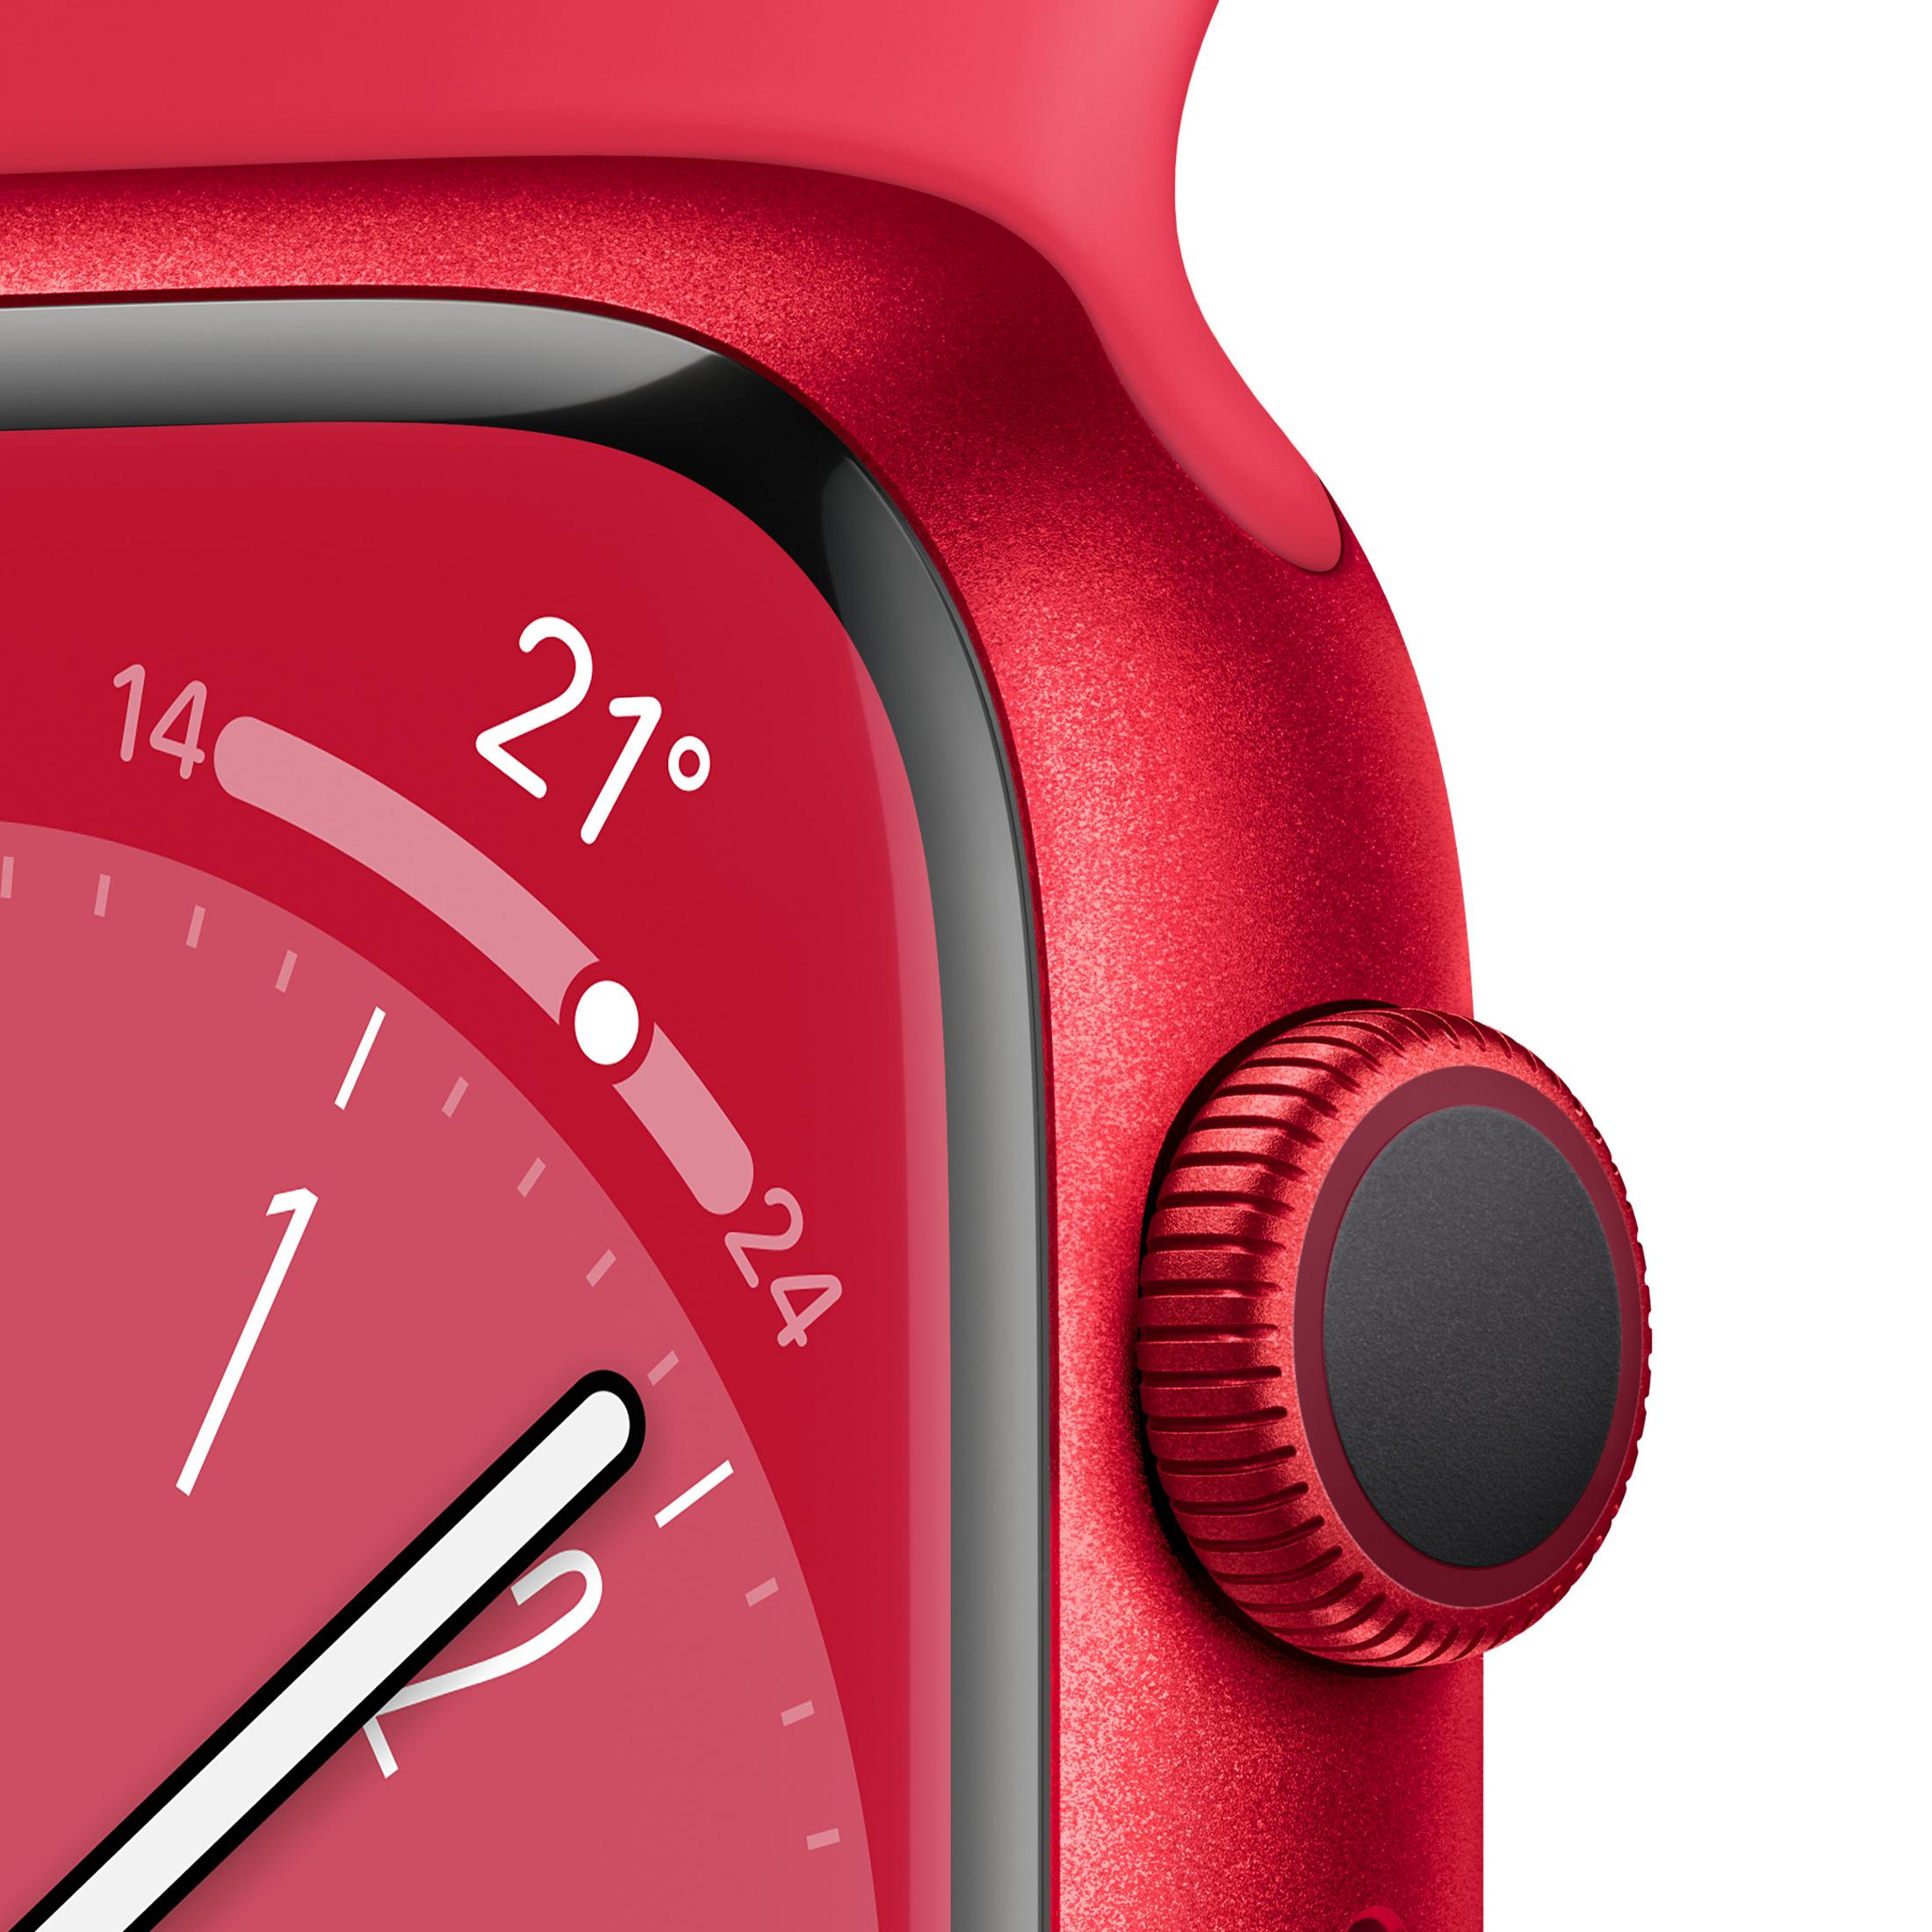 APPLE S8 GPS 41 (PRODUCT)RED - 200 RED Armband: RED 130 W (PRODUCT)RED, Aluminium mm, ALU Smartwatch SPORT Gehäuse: REG Fluorelastomer